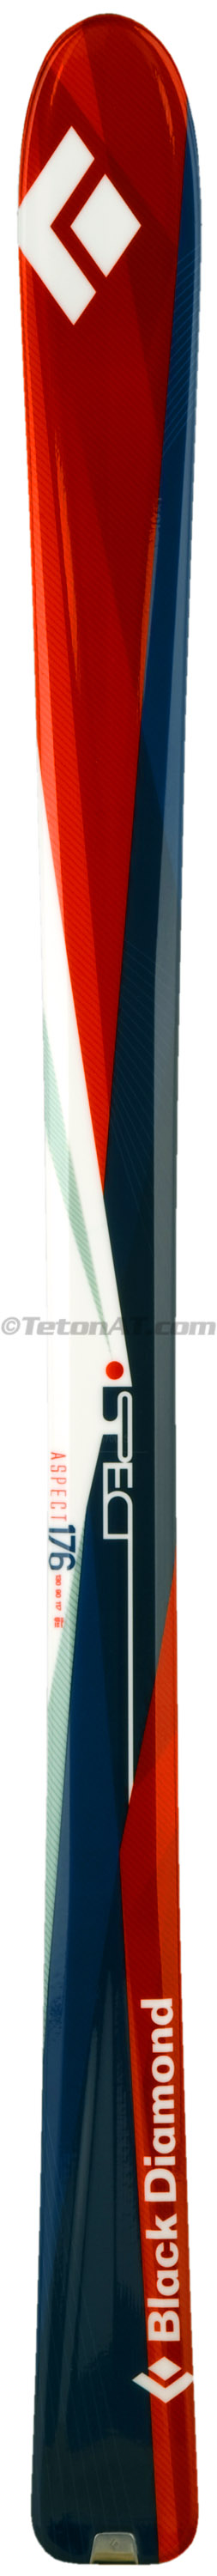 New 2010 Black Diamond Efficient Skis and Boots – TetonAT.com